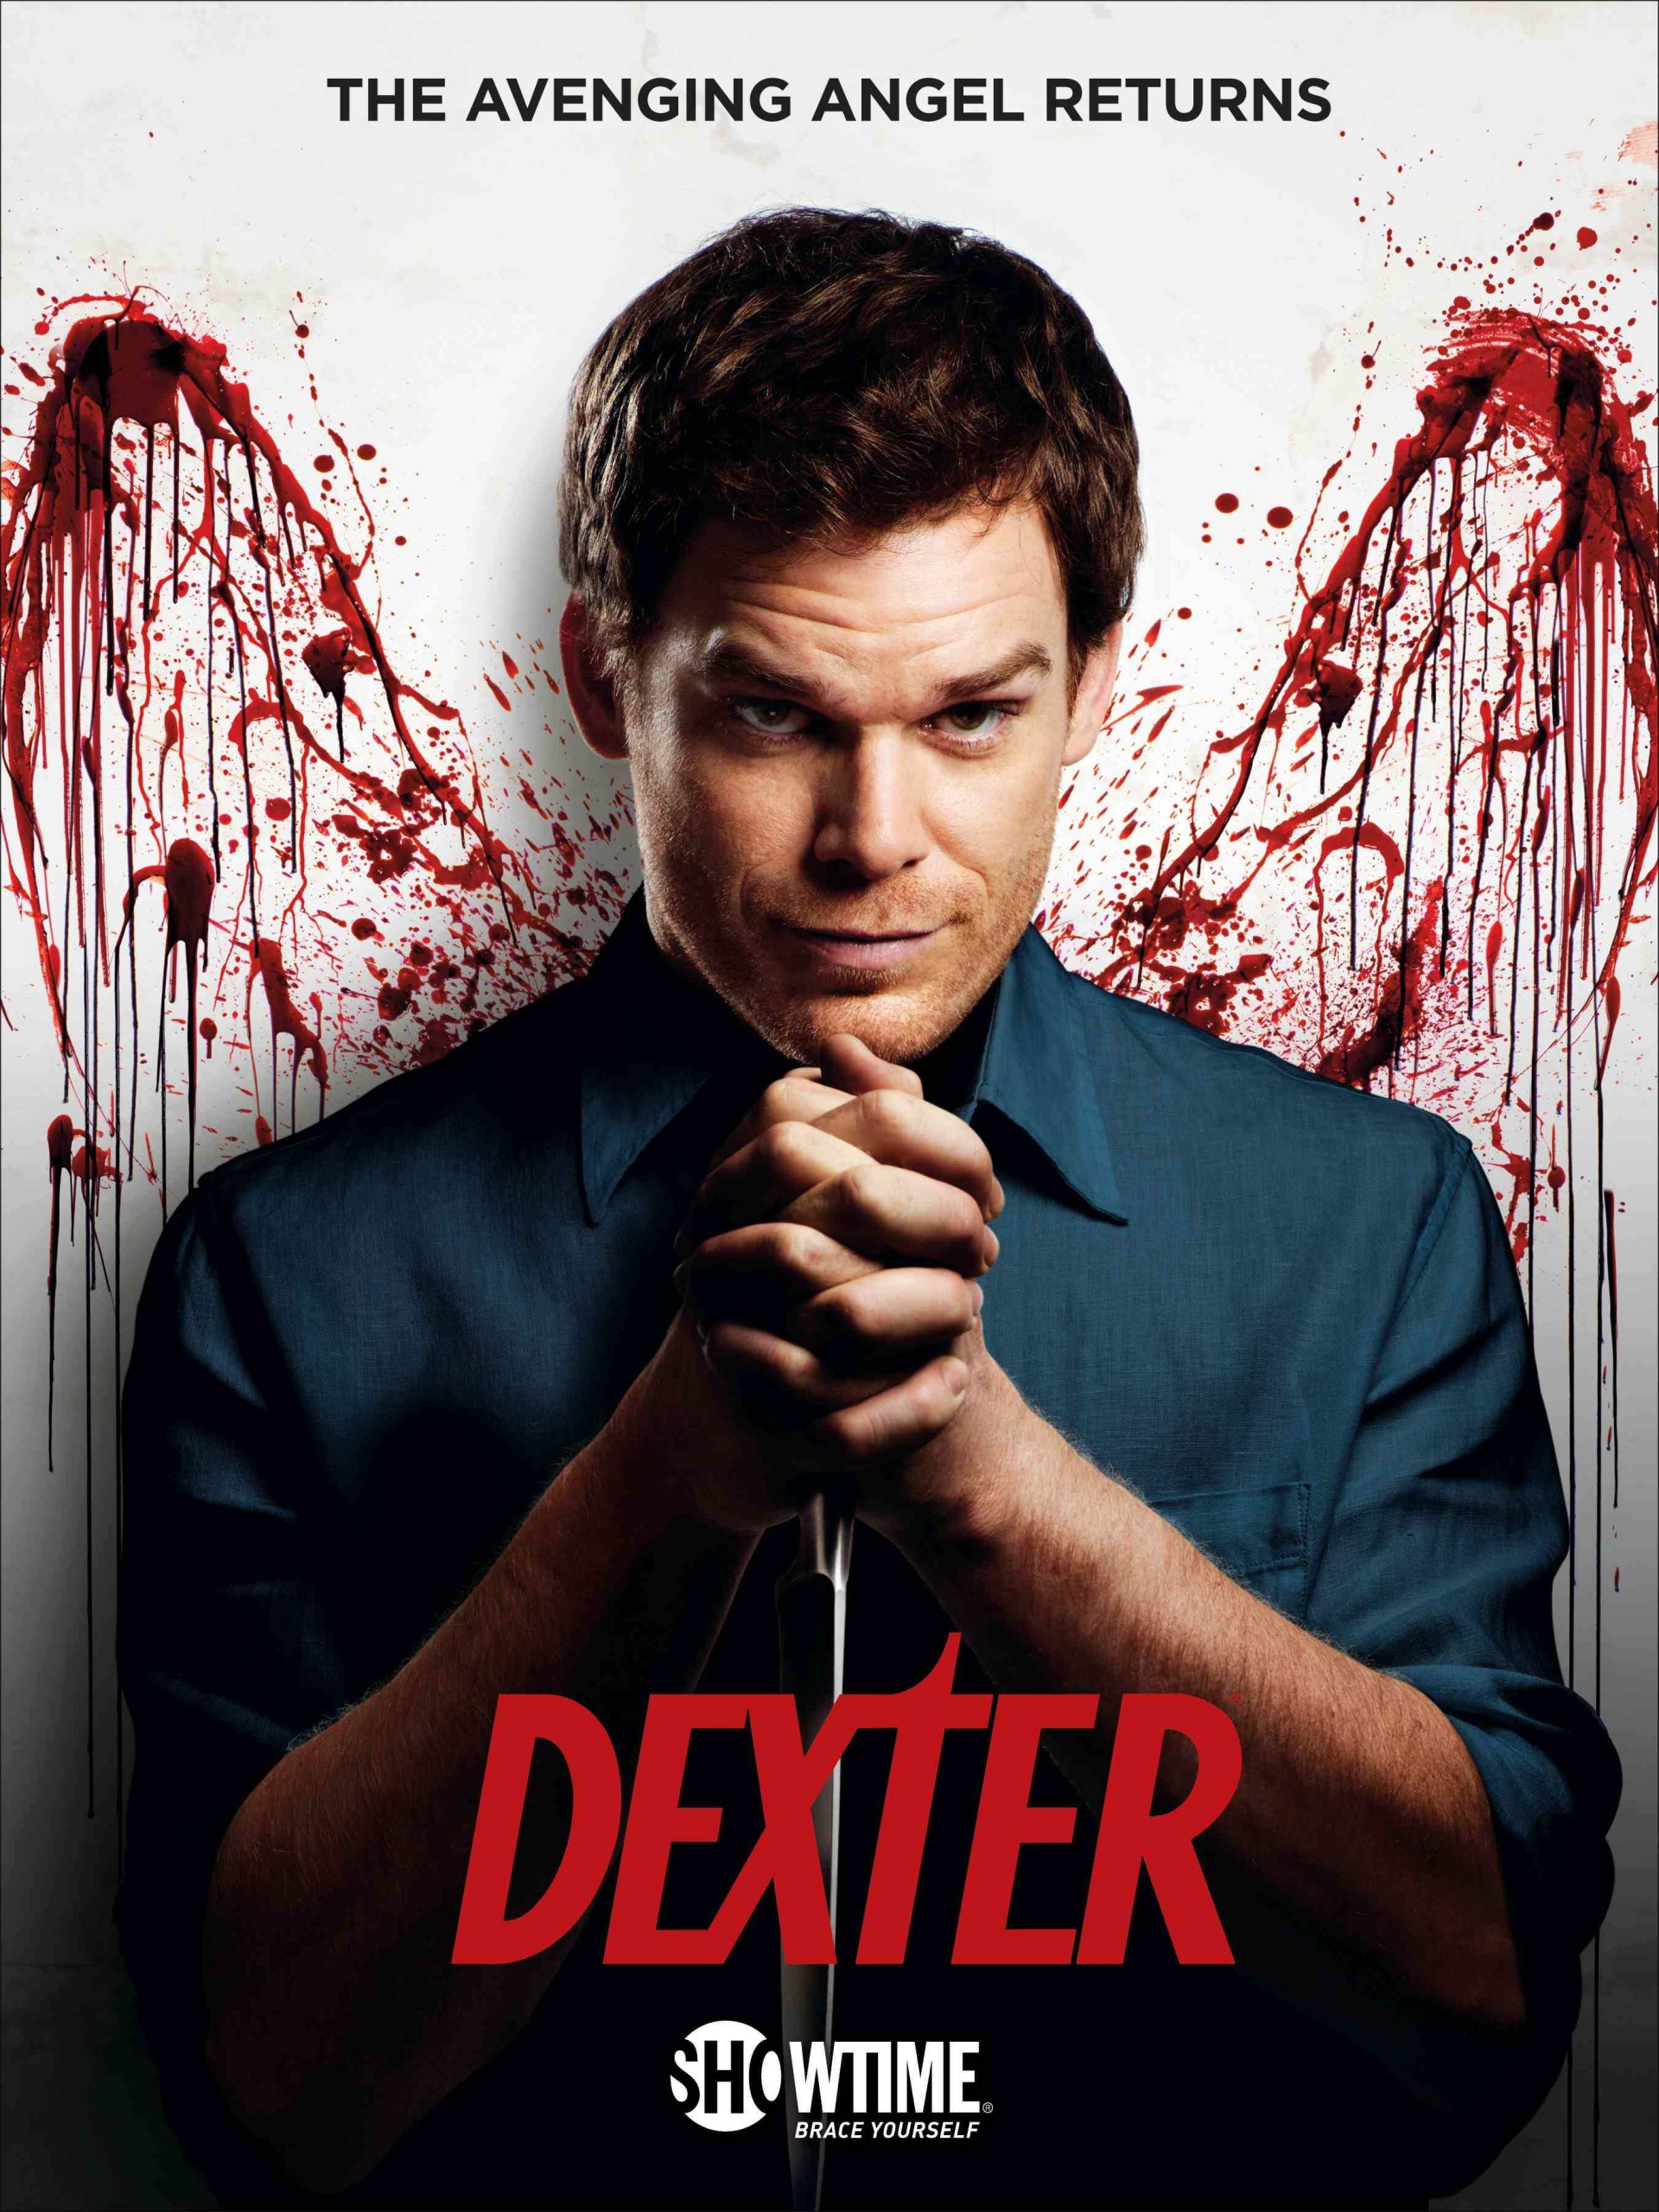 Amazing Dexter Pictures & Backgrounds